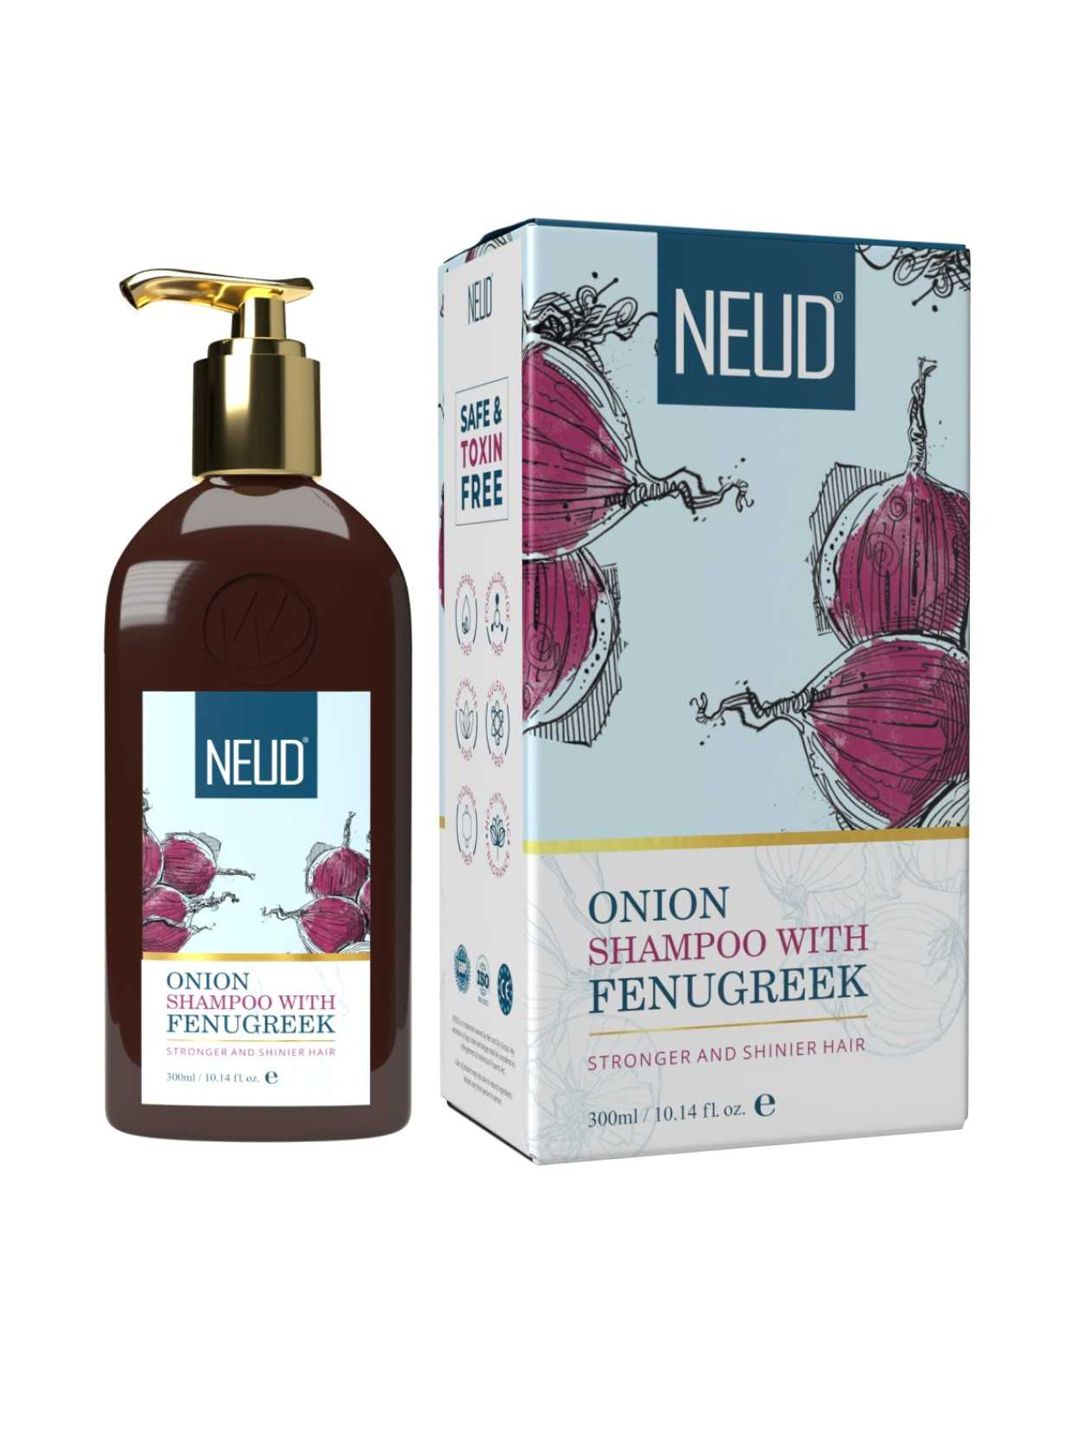 NEUD Onion Hair Shampoo with Fenugreek - 300 ml Price in India